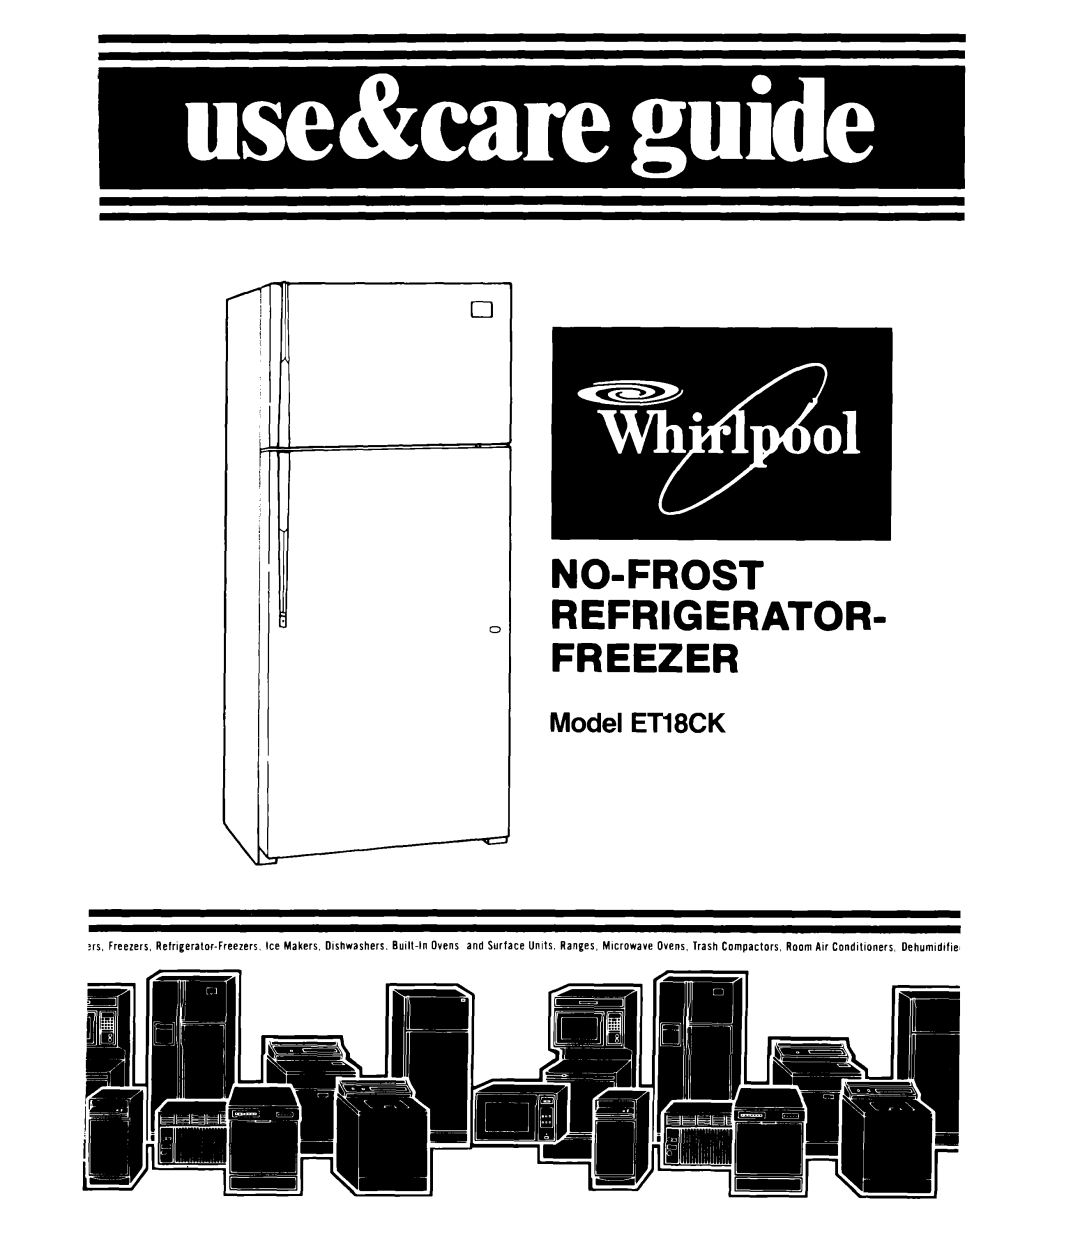 Whirlpool manual No-Frost, Crefrigerator- Freezer, Model ETl8CK 